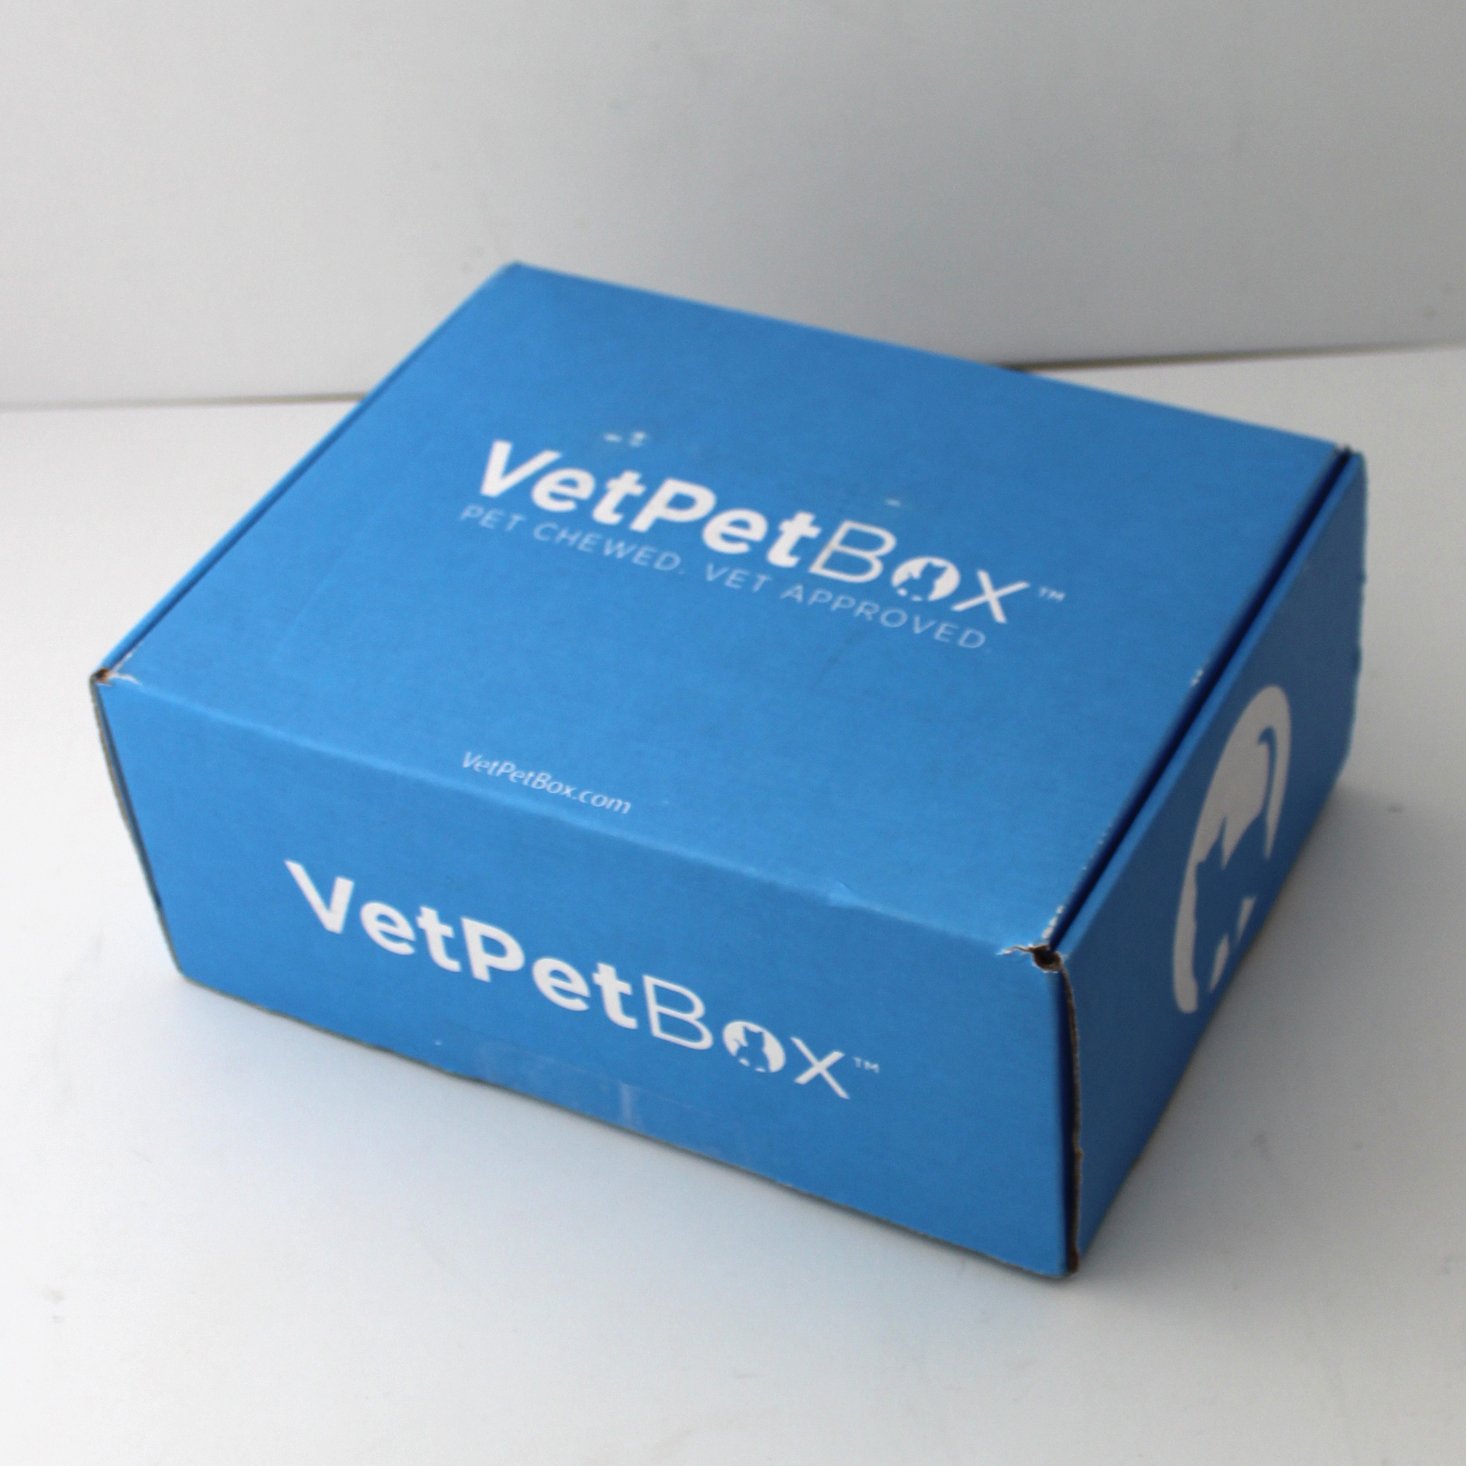 VetPet Box Cat Subscription Review + Coupon – May 2020